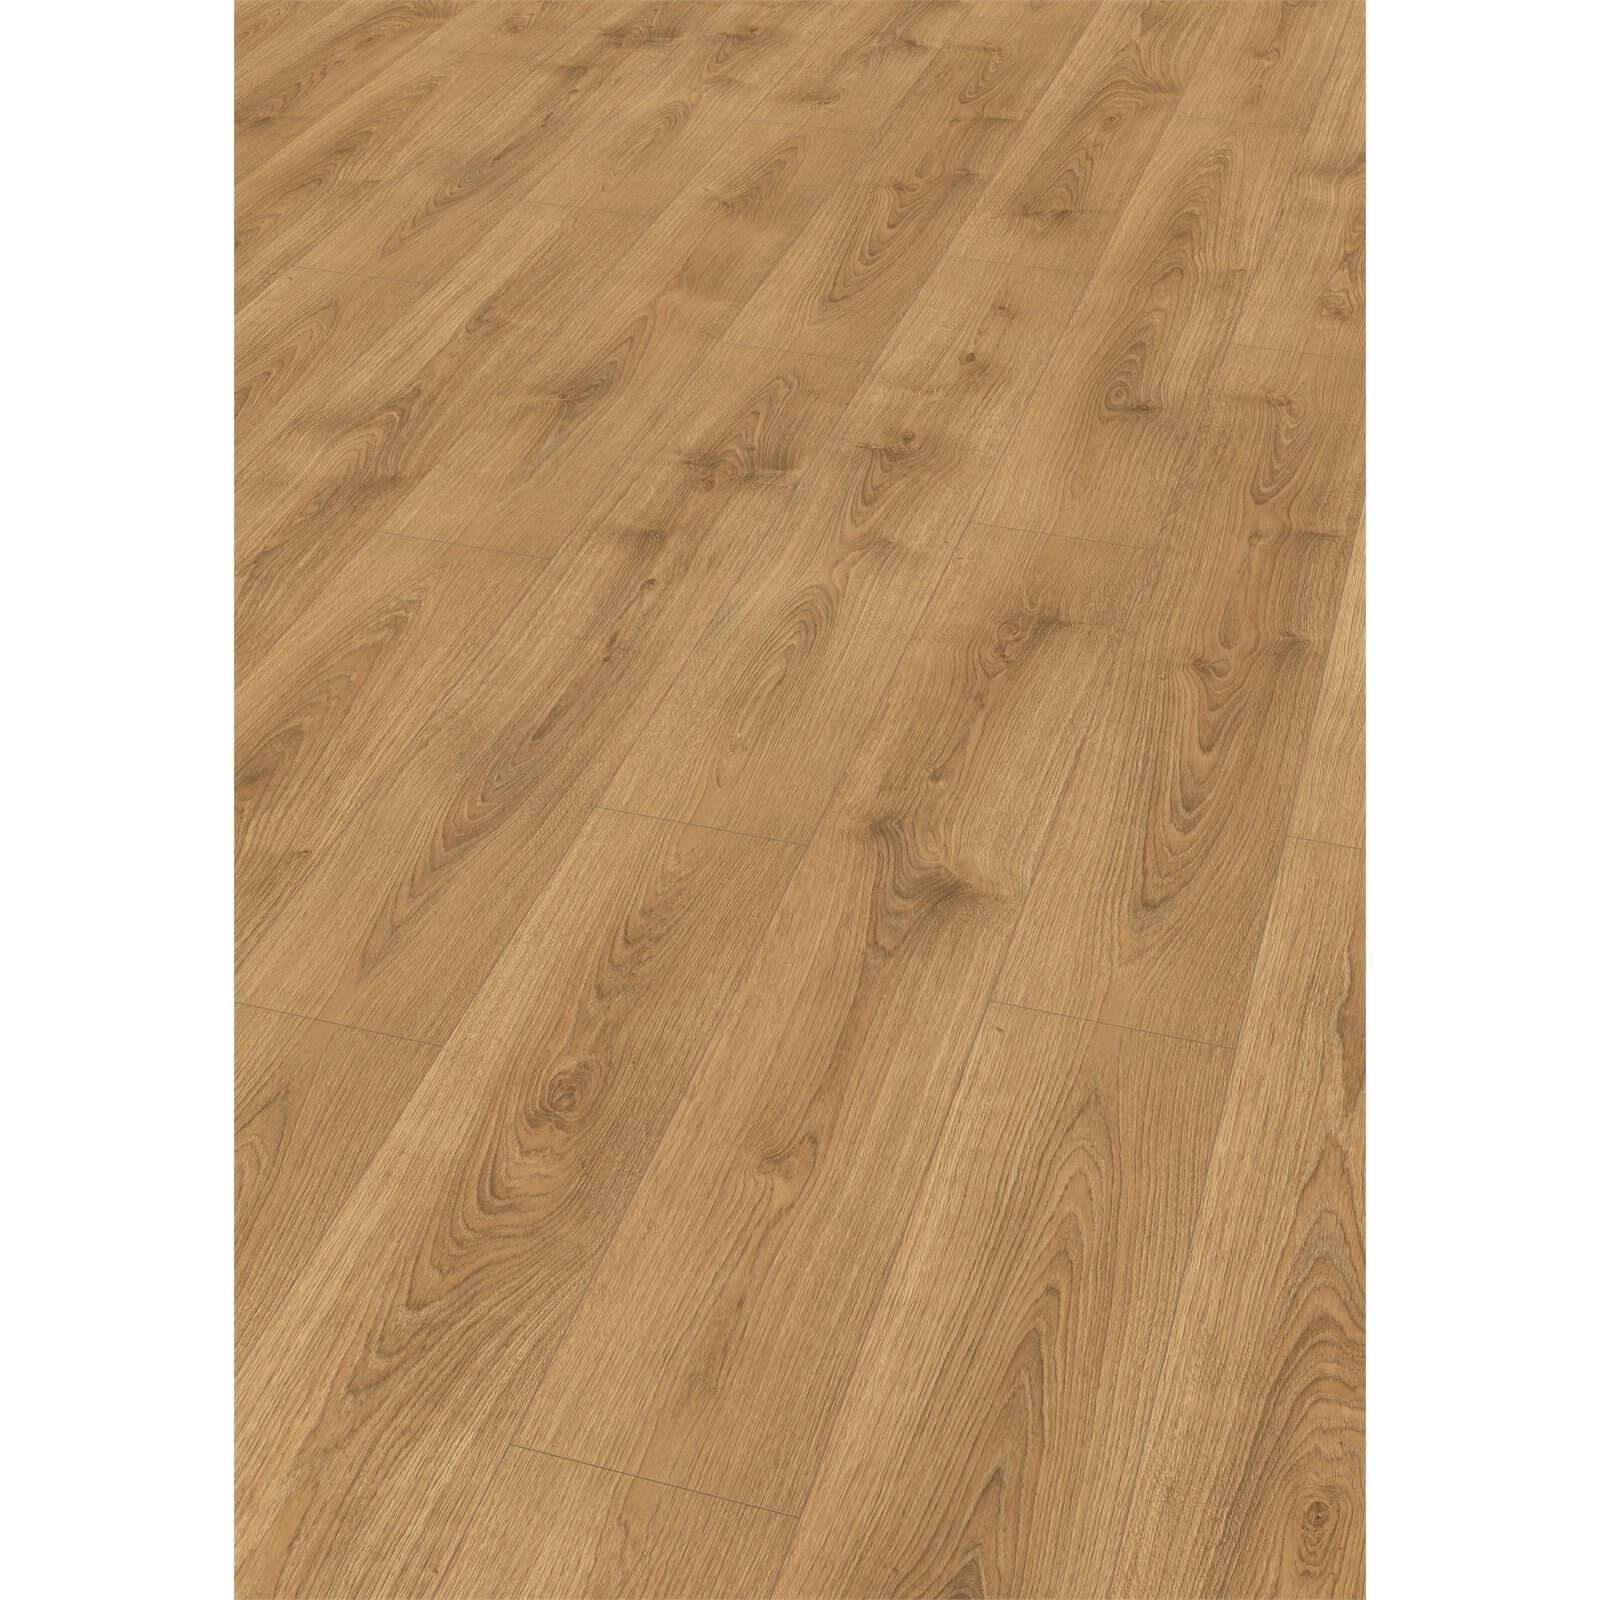 EGGER HOME Honey Brook Oak 12mm Laminate Flooring - 1.49 sqm Pack